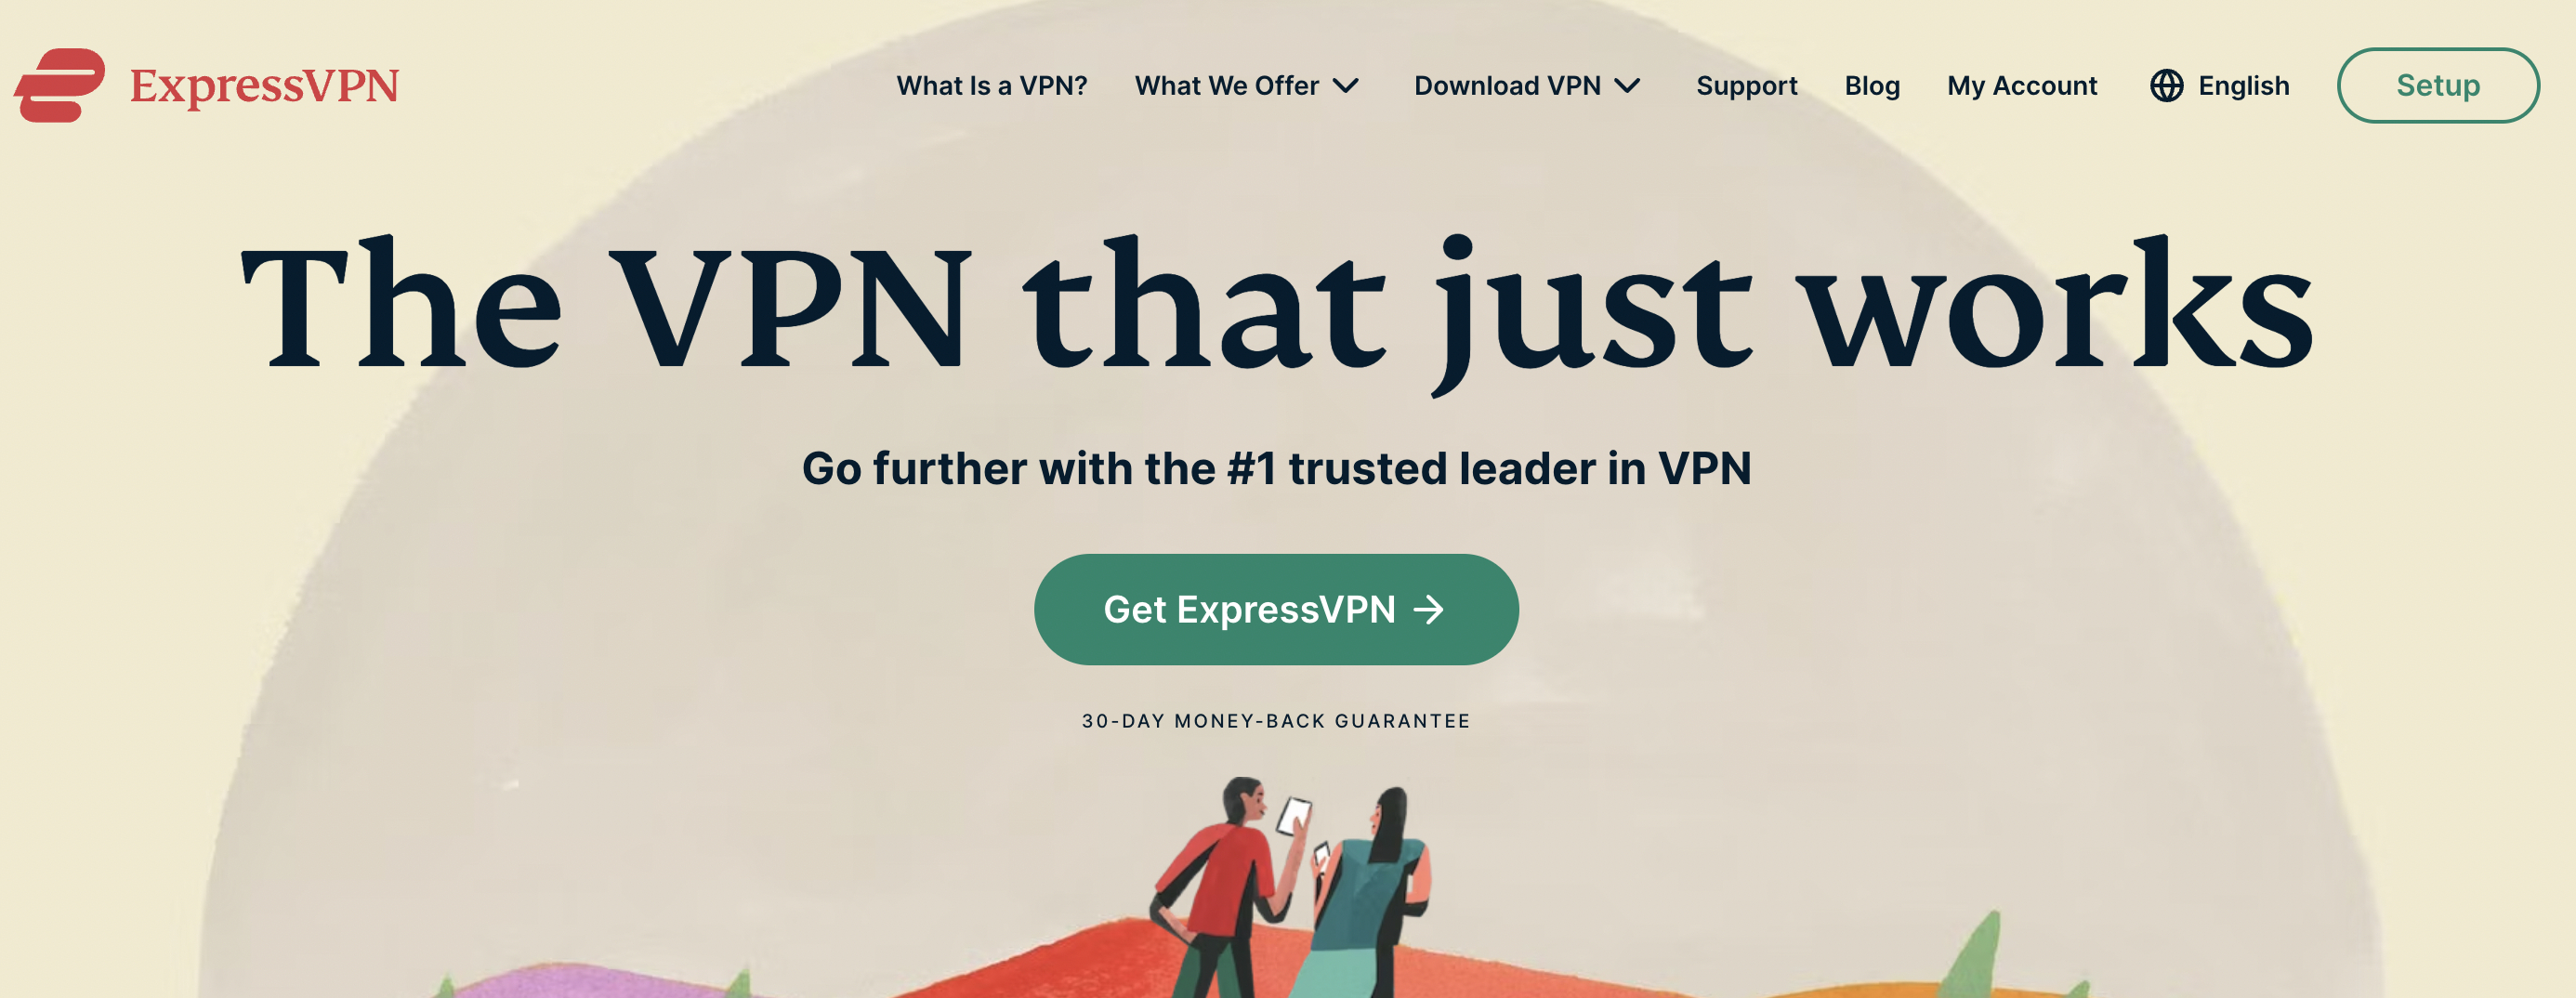 ExpressVPN website